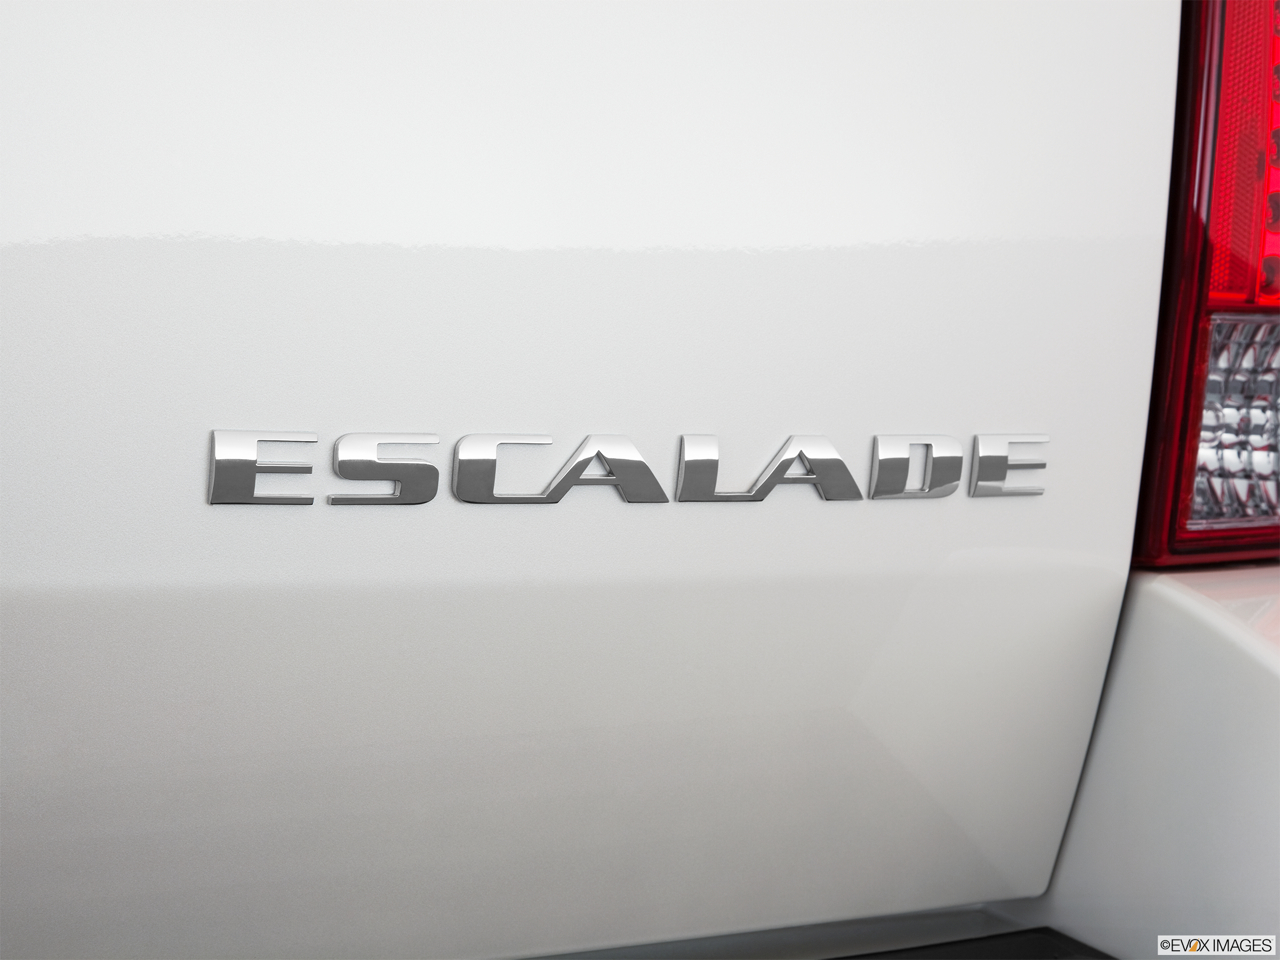 2011 Cadillac Escalade Hybrid Base Rear model badge/emblem 